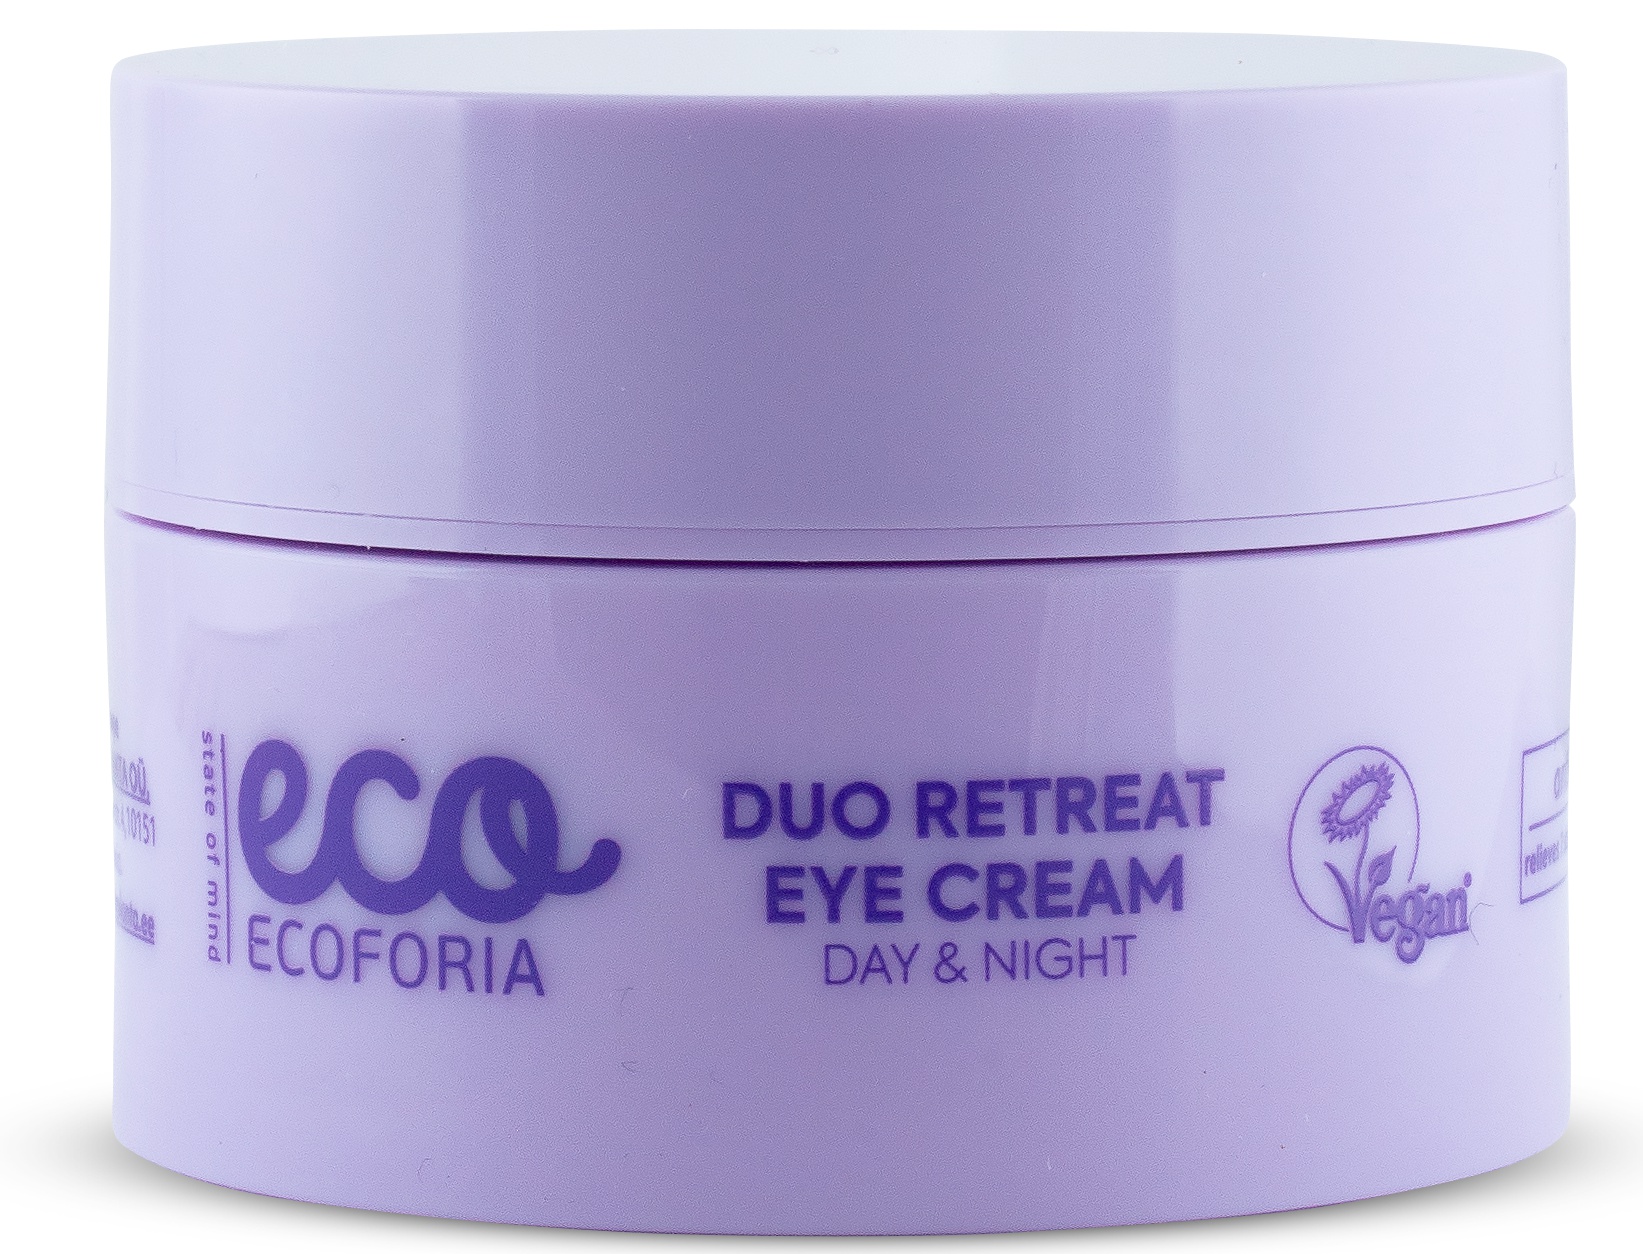 Ecoforia Duo Retreat Eye Cream